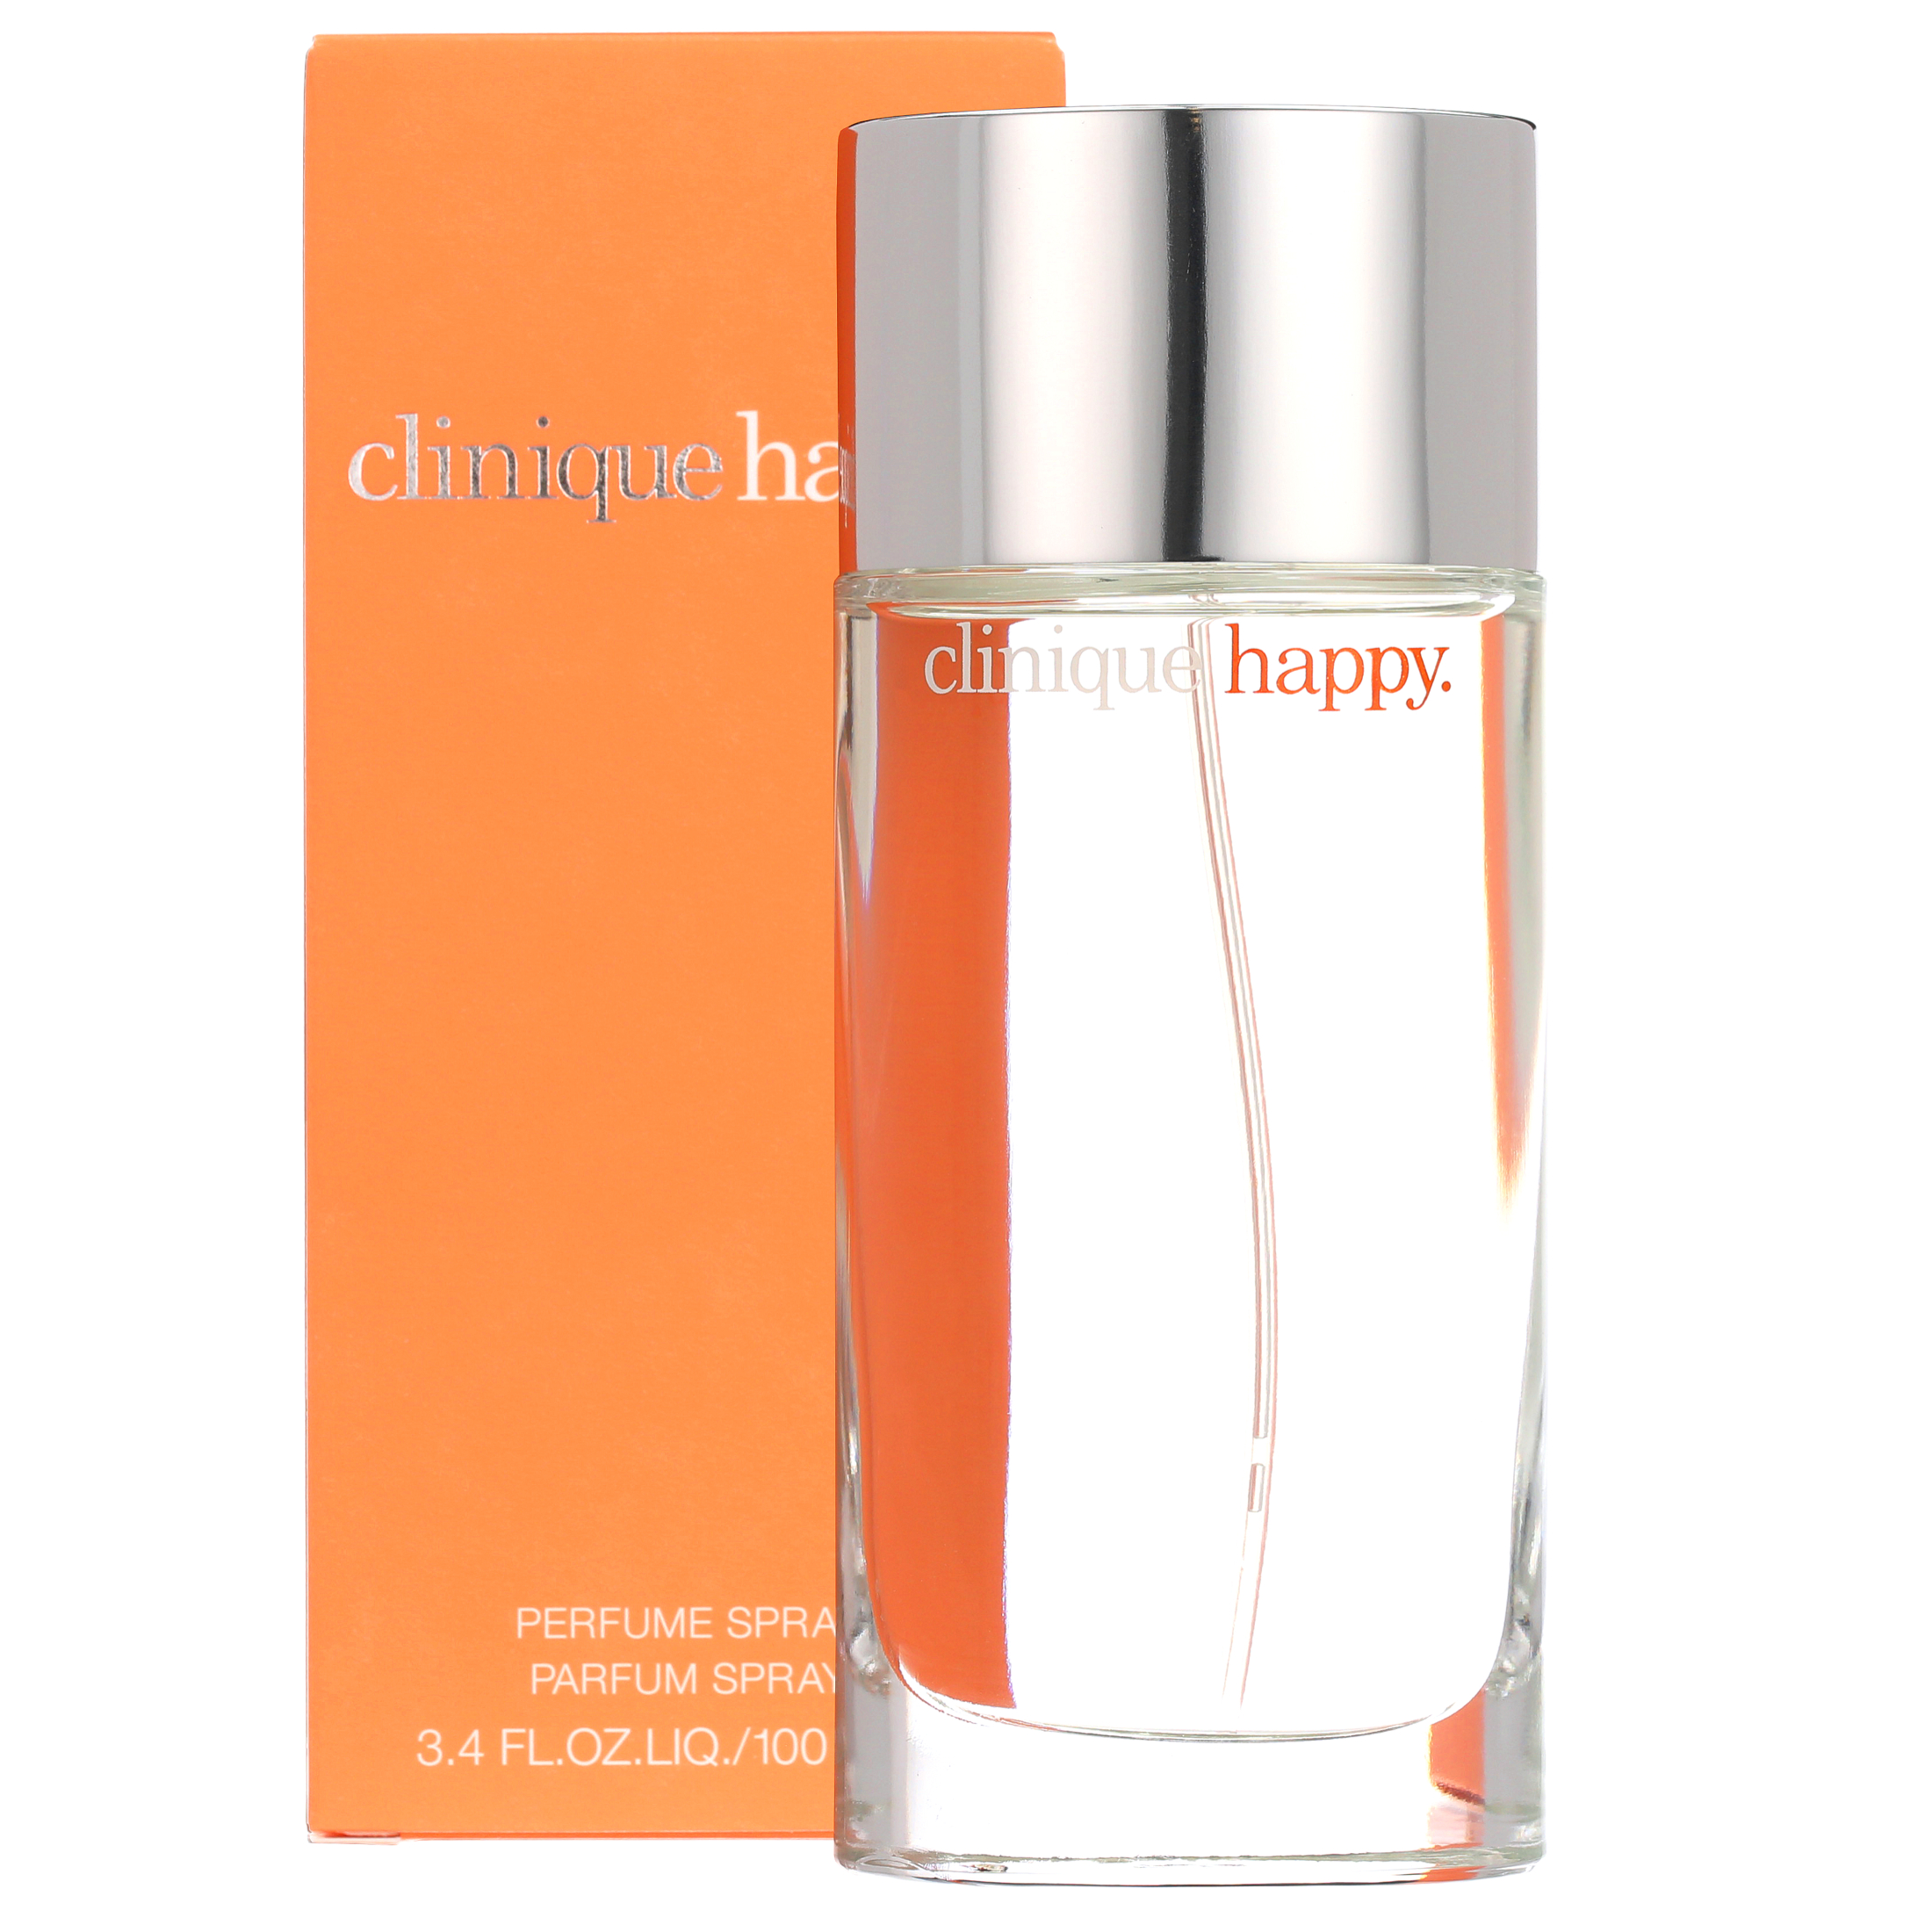 Clinique Happy Eau De Parfum Spray, Perfume for Women, 3.4 oz - image 1 of 5